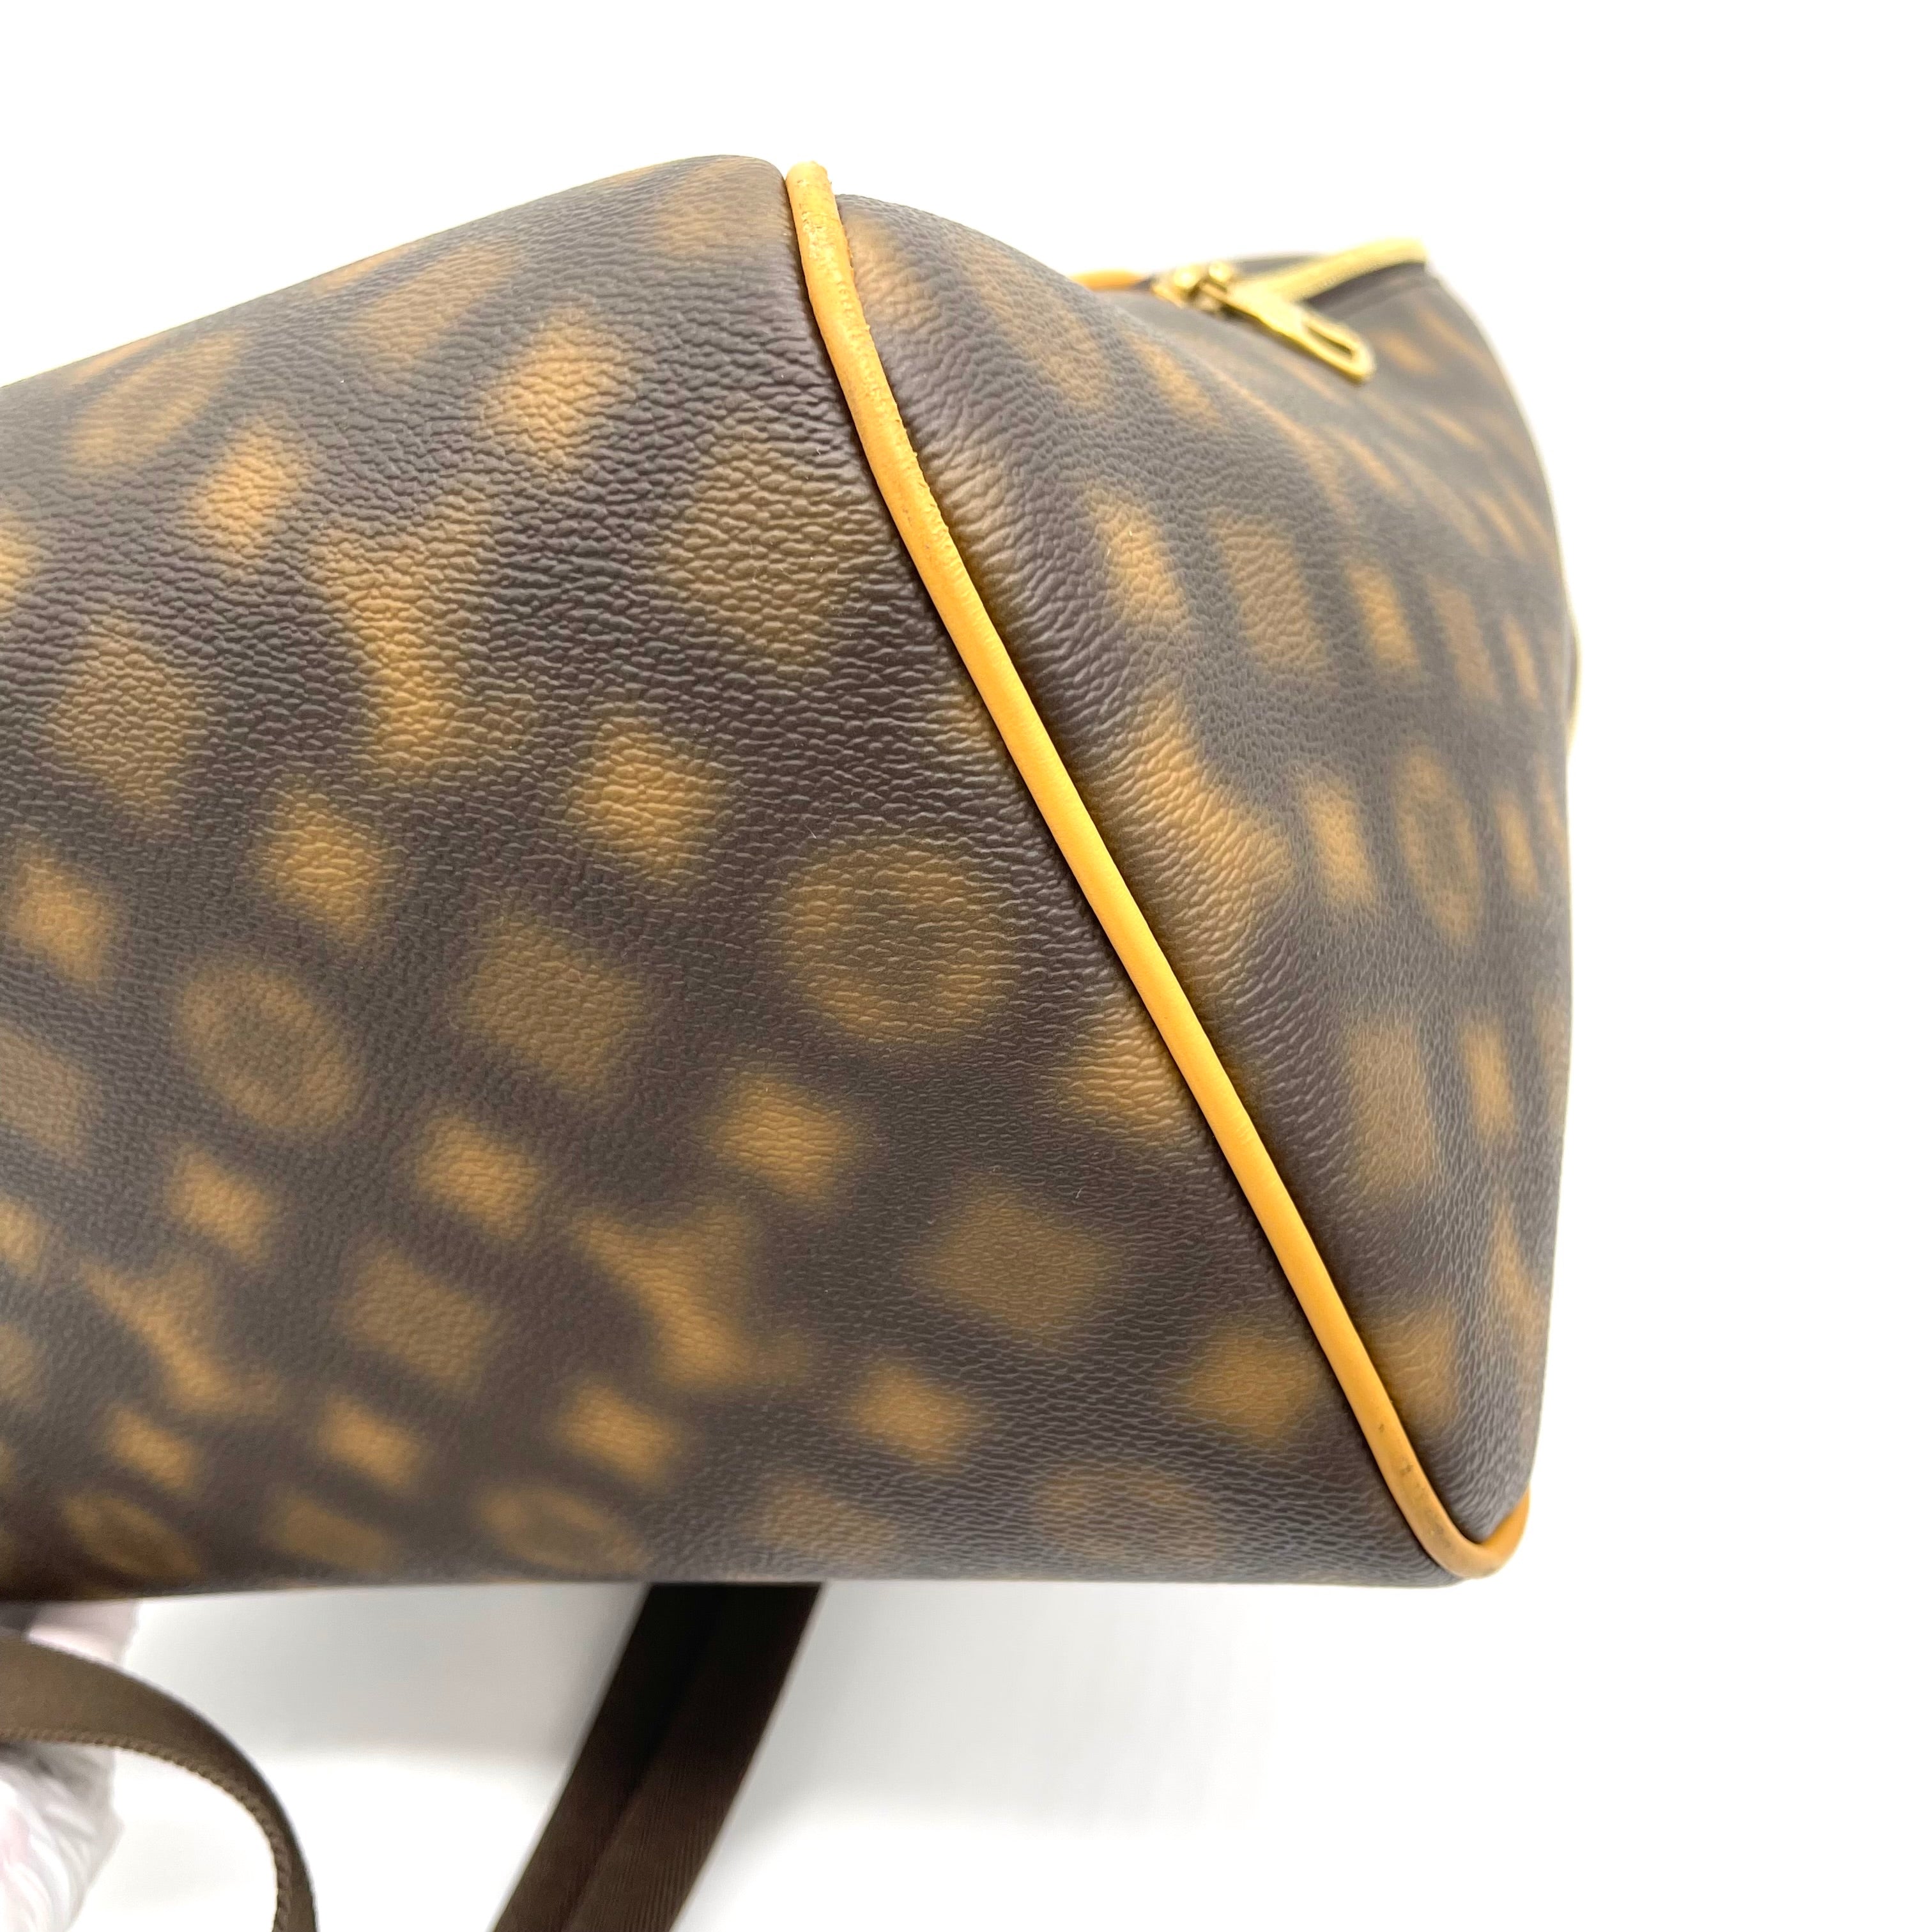 Louis Vuitton - Authenticated Ellipse Handbag - Cloth Brown for Women, Very Good Condition